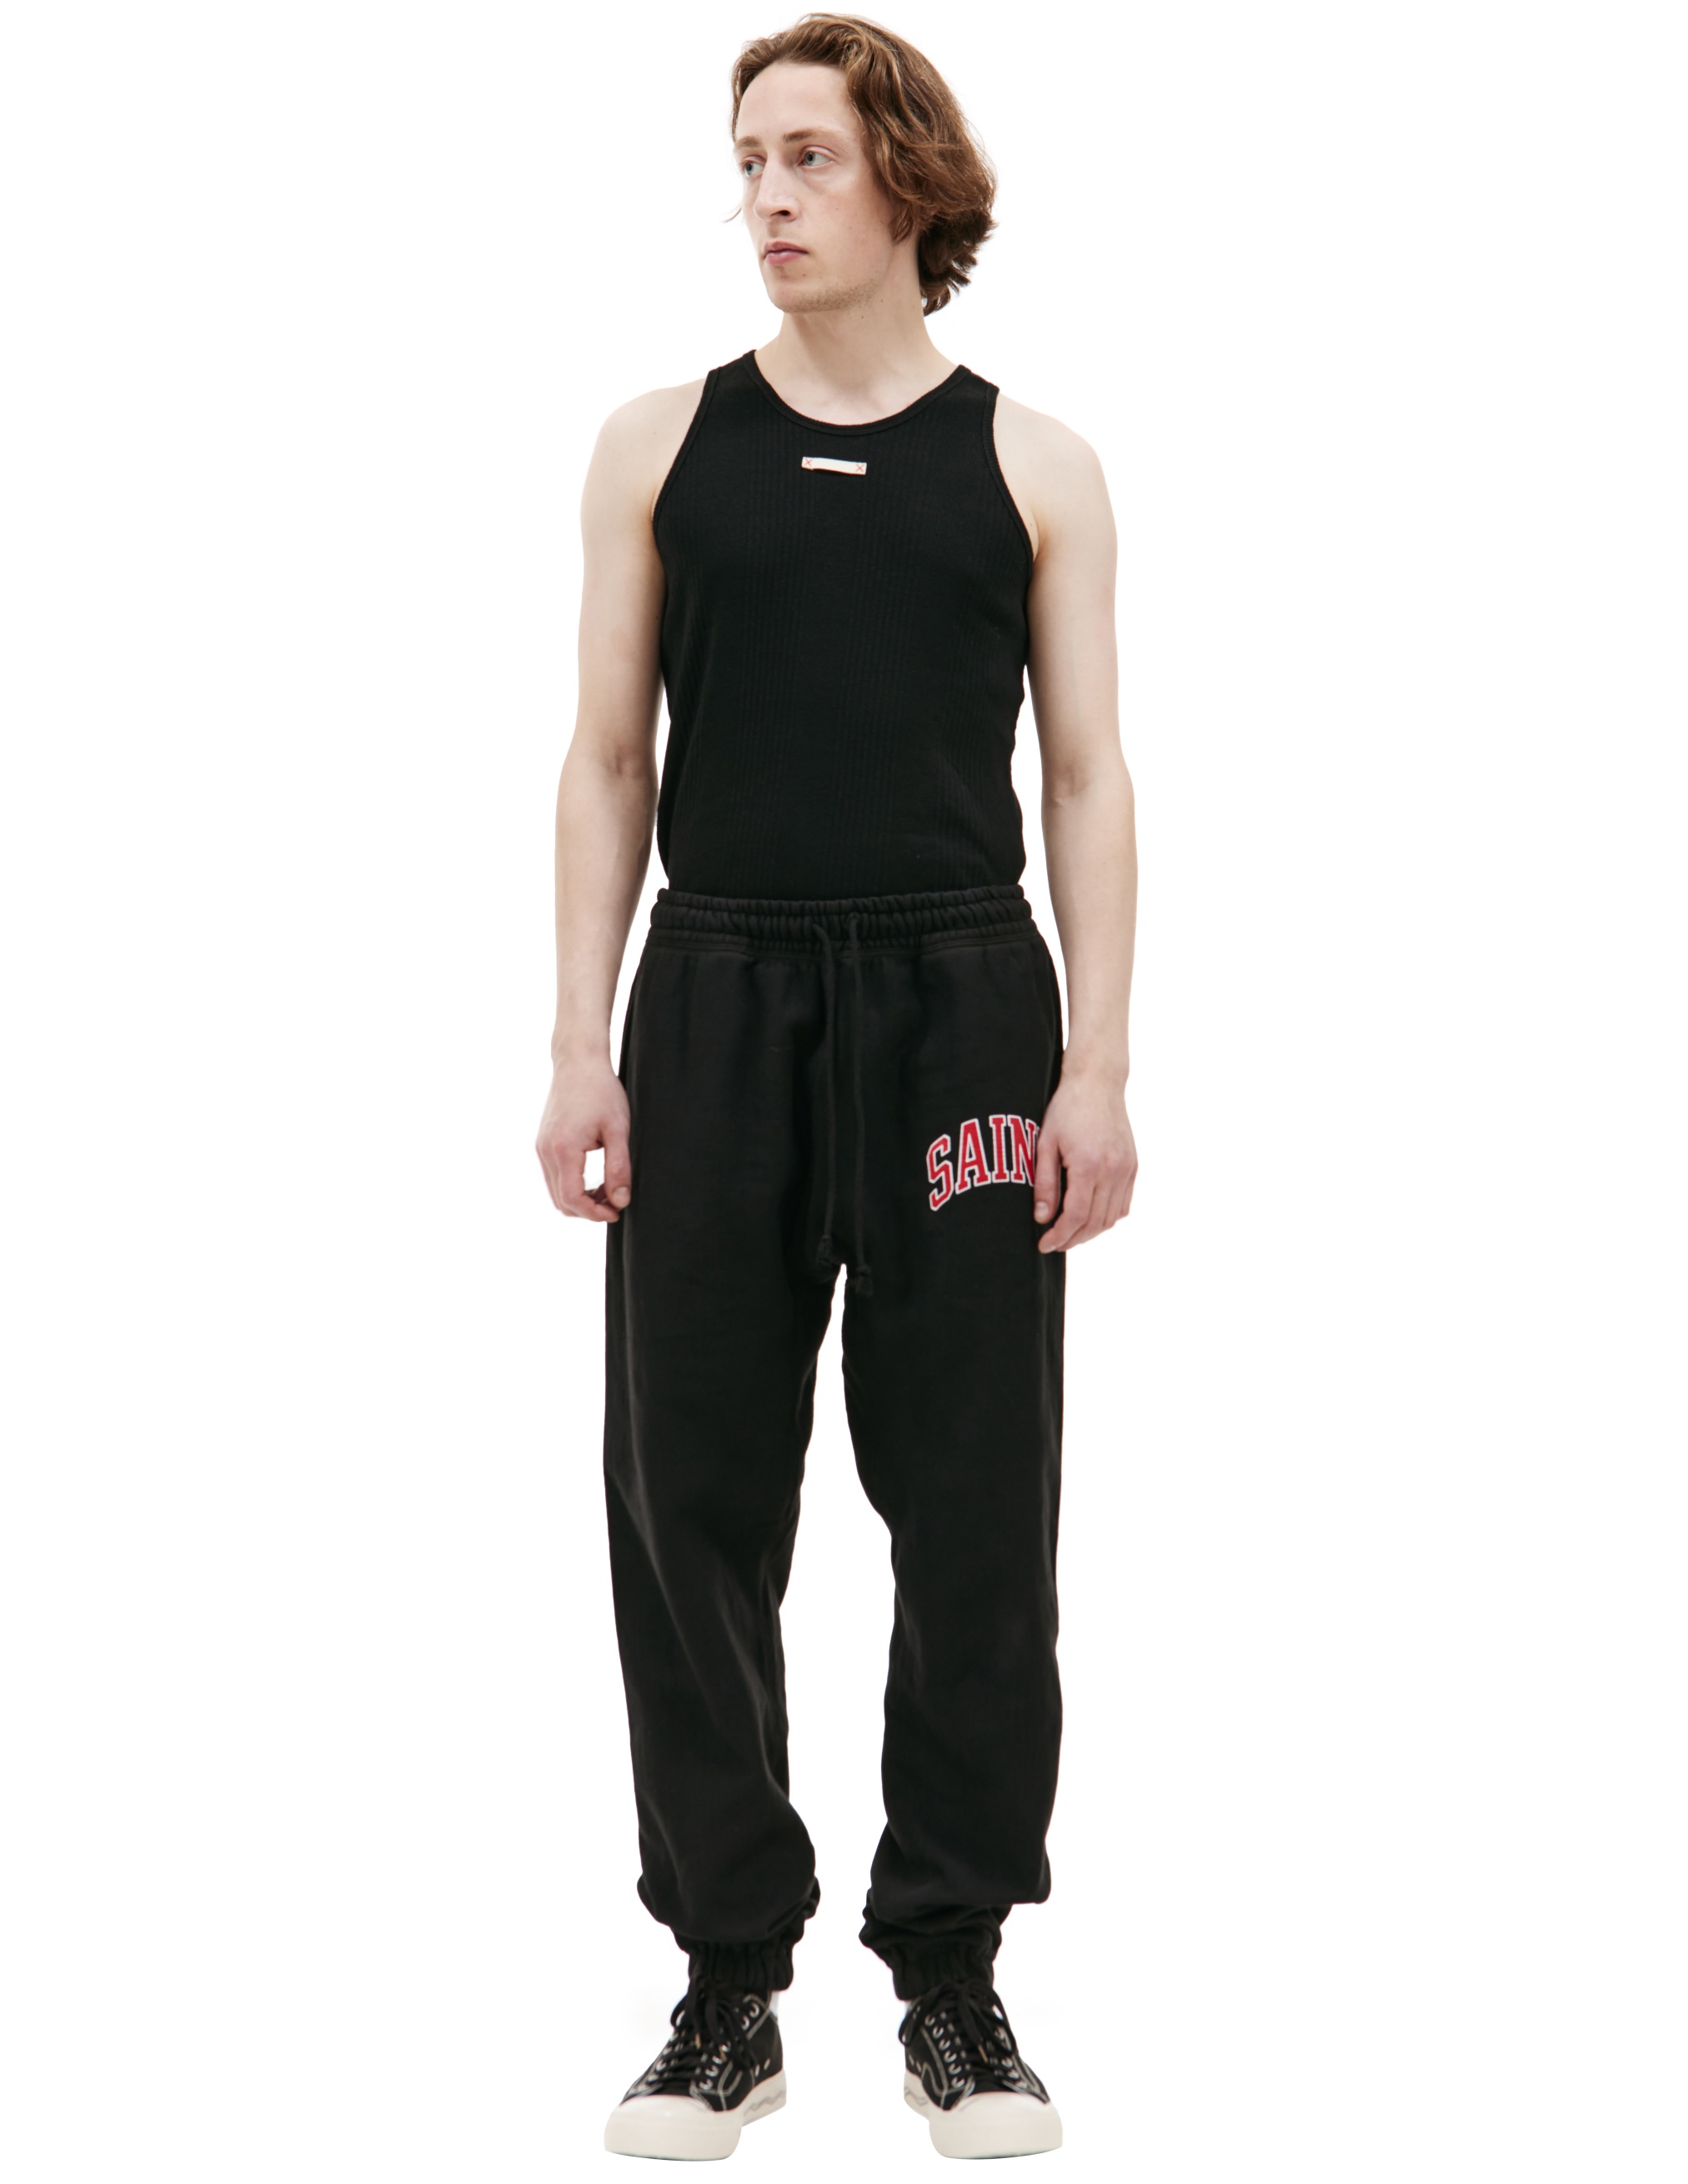 Спортивные брюки с логотипом Saint Michael SM-A23-0000-036, размер M;L;XL - фото 1